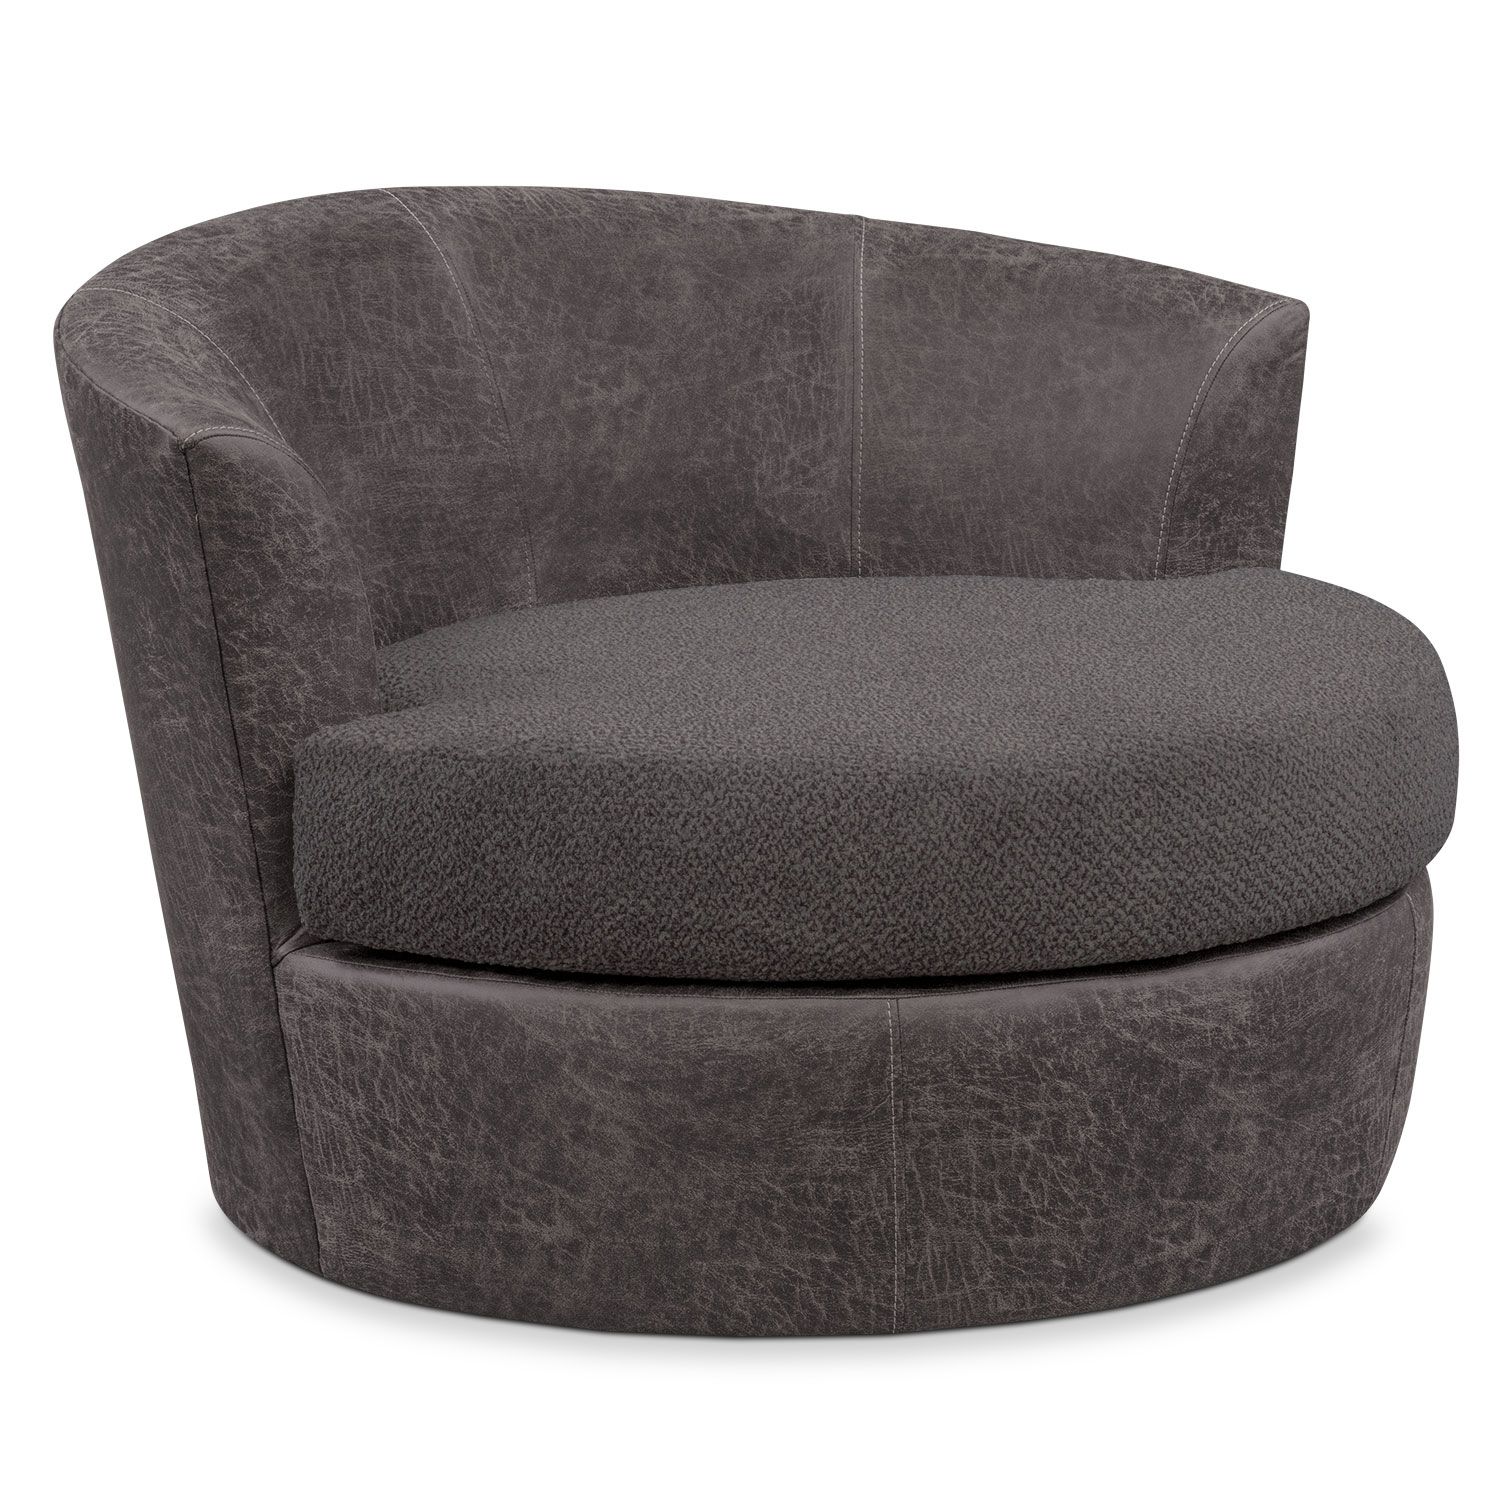 Brando Swivel Swivel Chair | Value City Furniture And Mattresses Regarding Loft Smokey Swivel Accent Chairs (Photo 5 of 20)